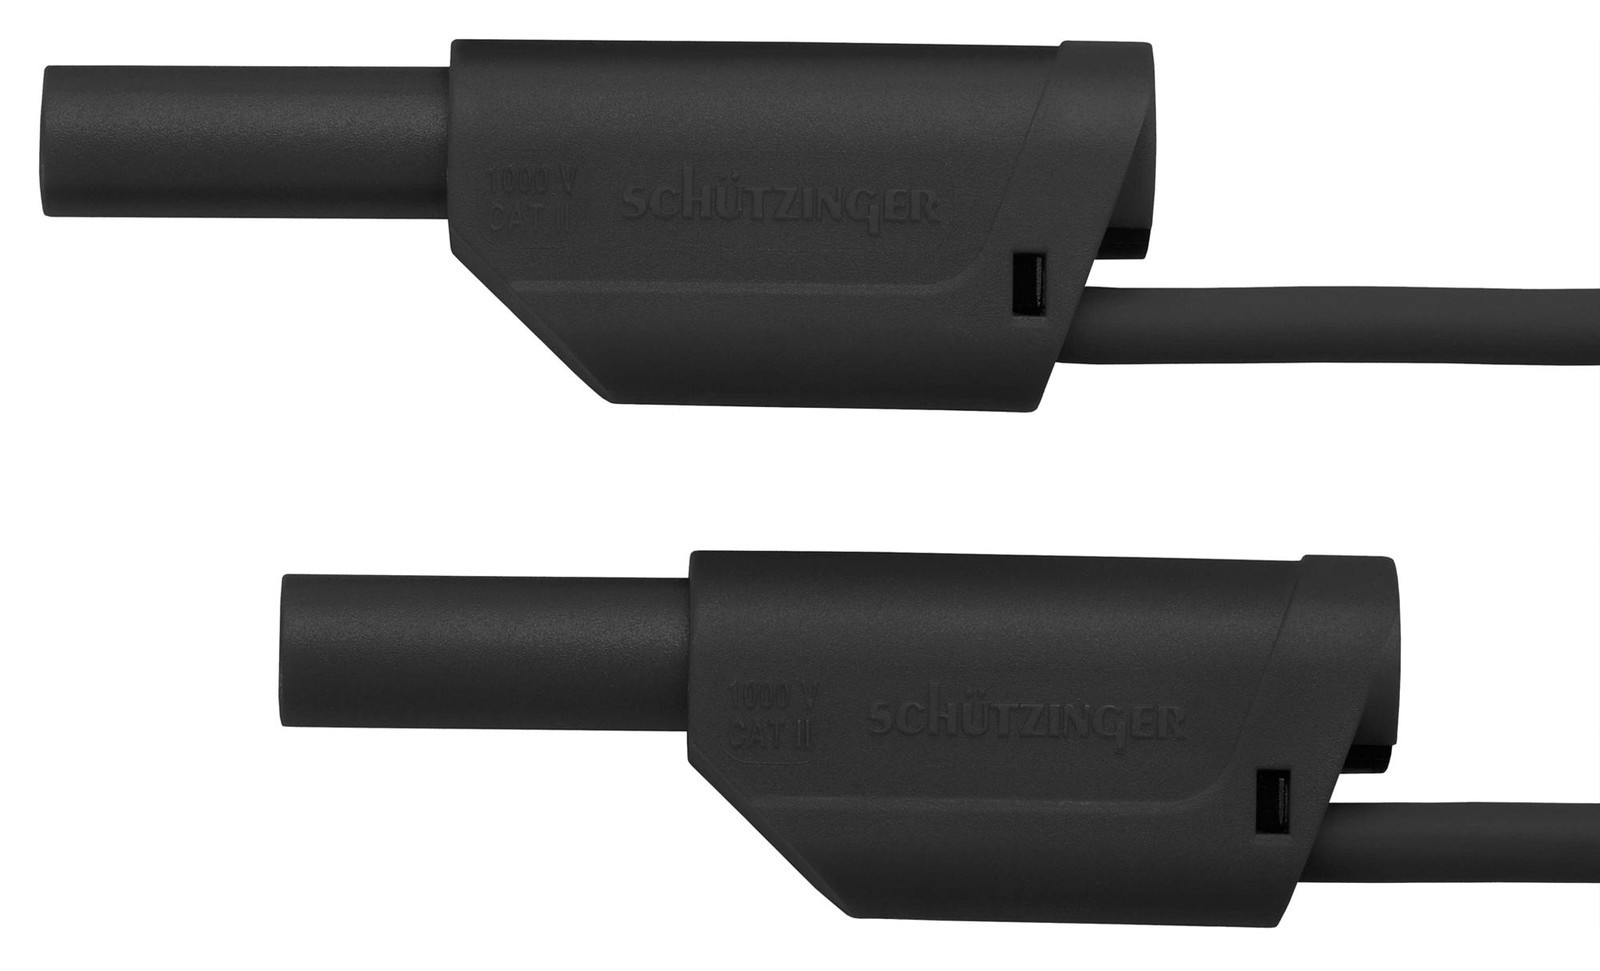 Schutzinger Vsfk 5000 / 1 / 50 / Sw Test Lead, Stackable Banana Plug, 500mm